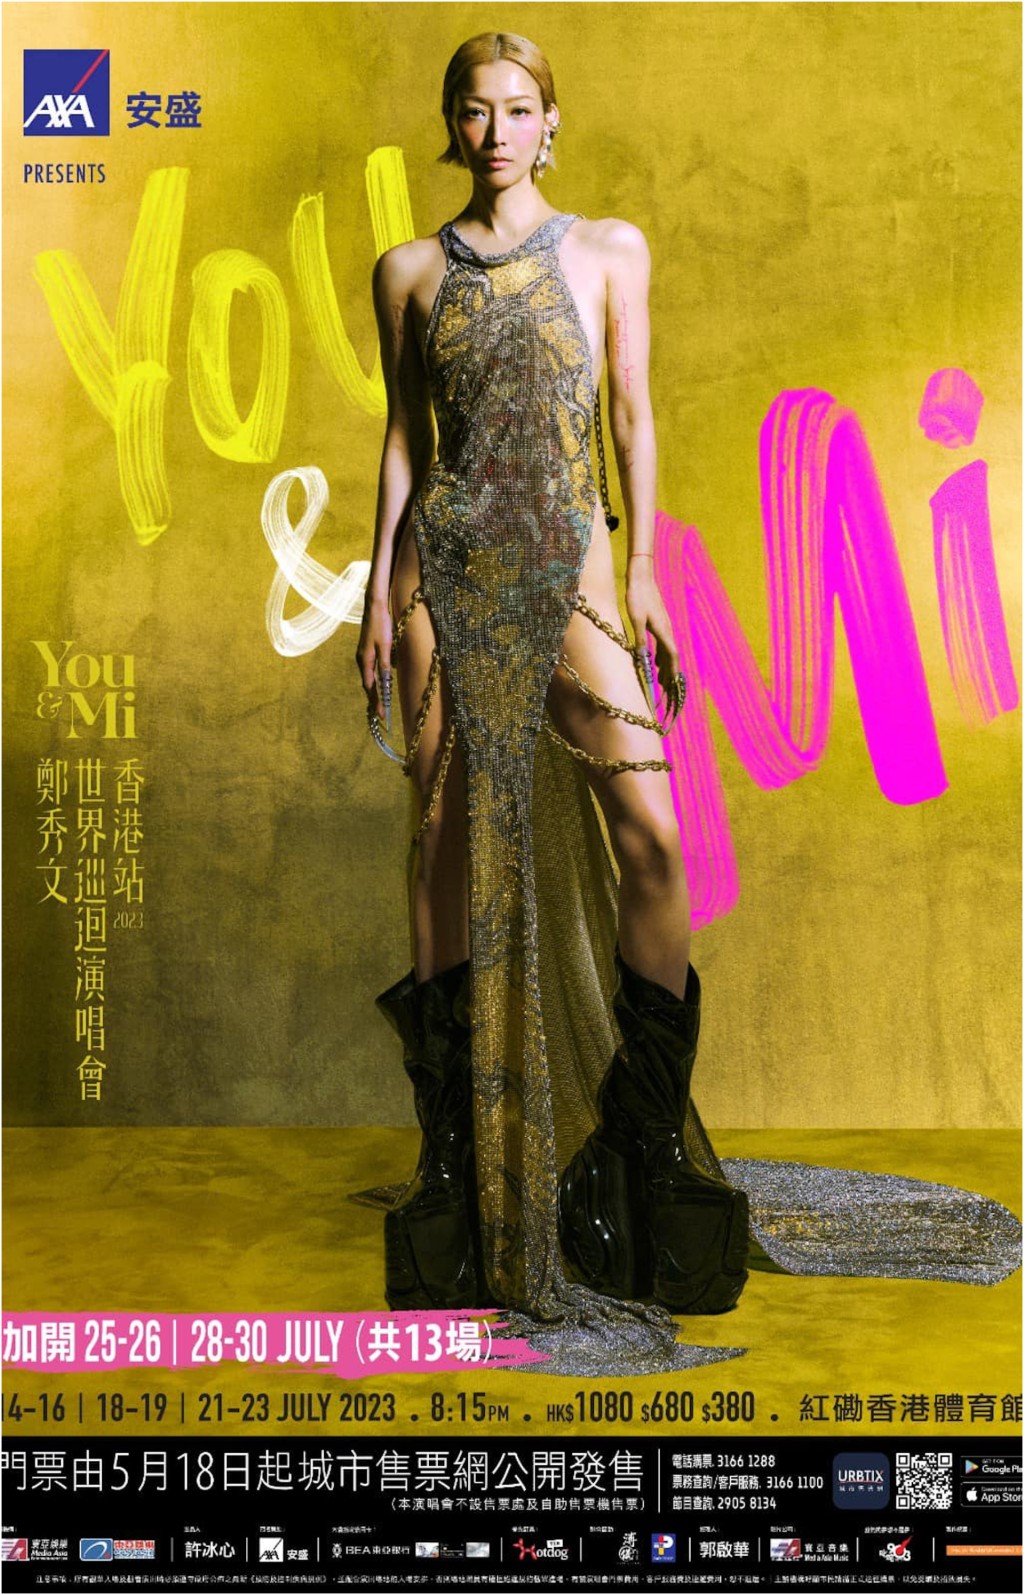 《You & Mi郑秀文世界巡回演唱会香港站2023》于今年7月举行。